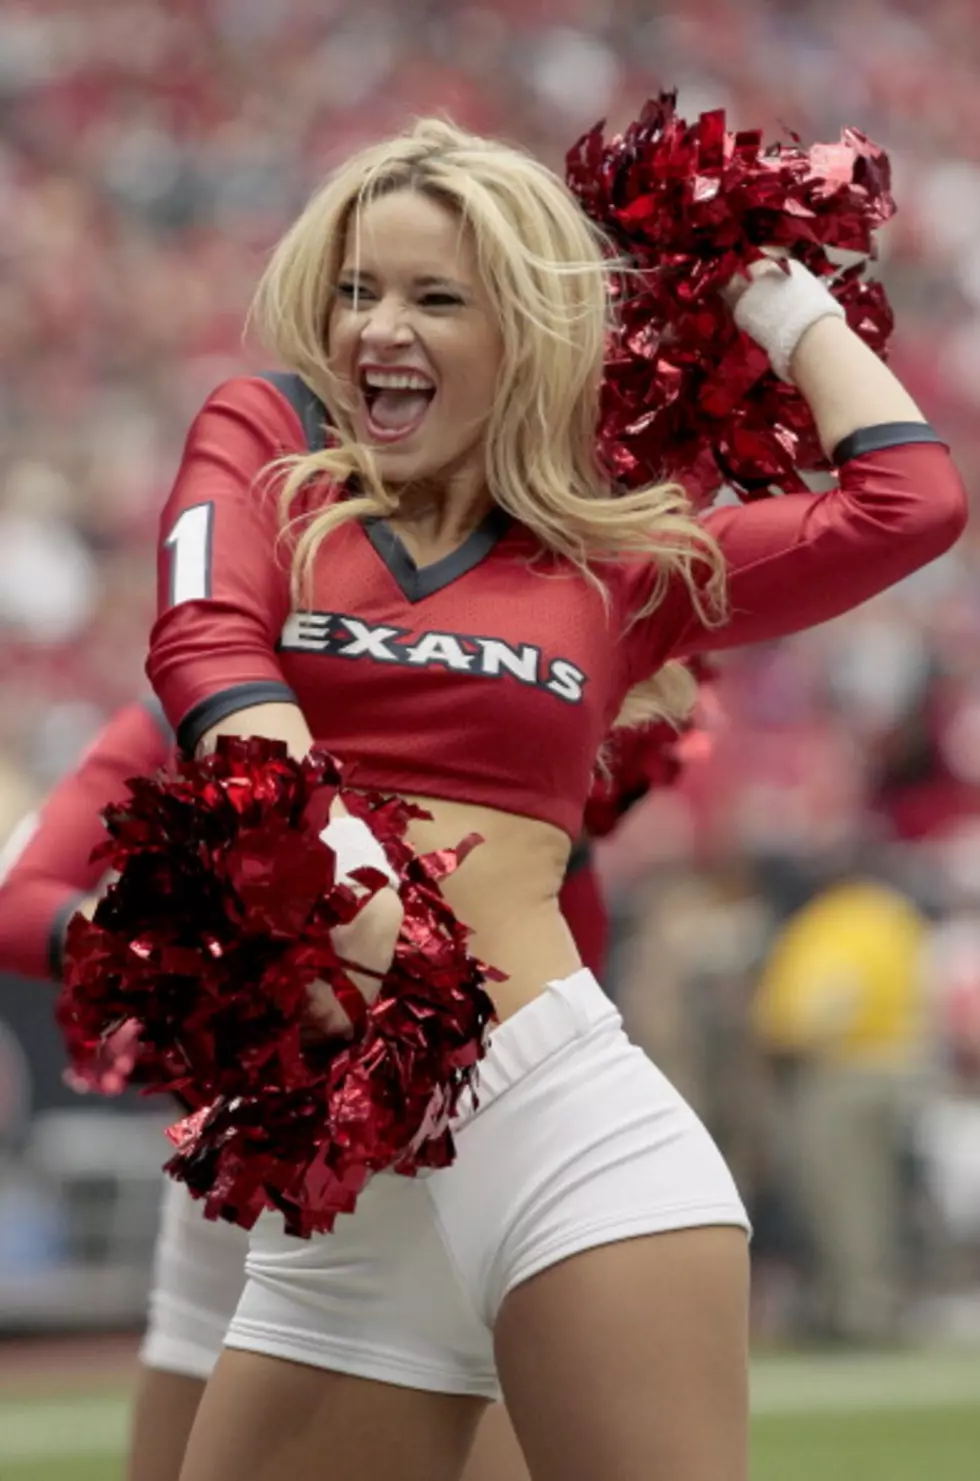 Cheerleader of the Day: Houston Texans